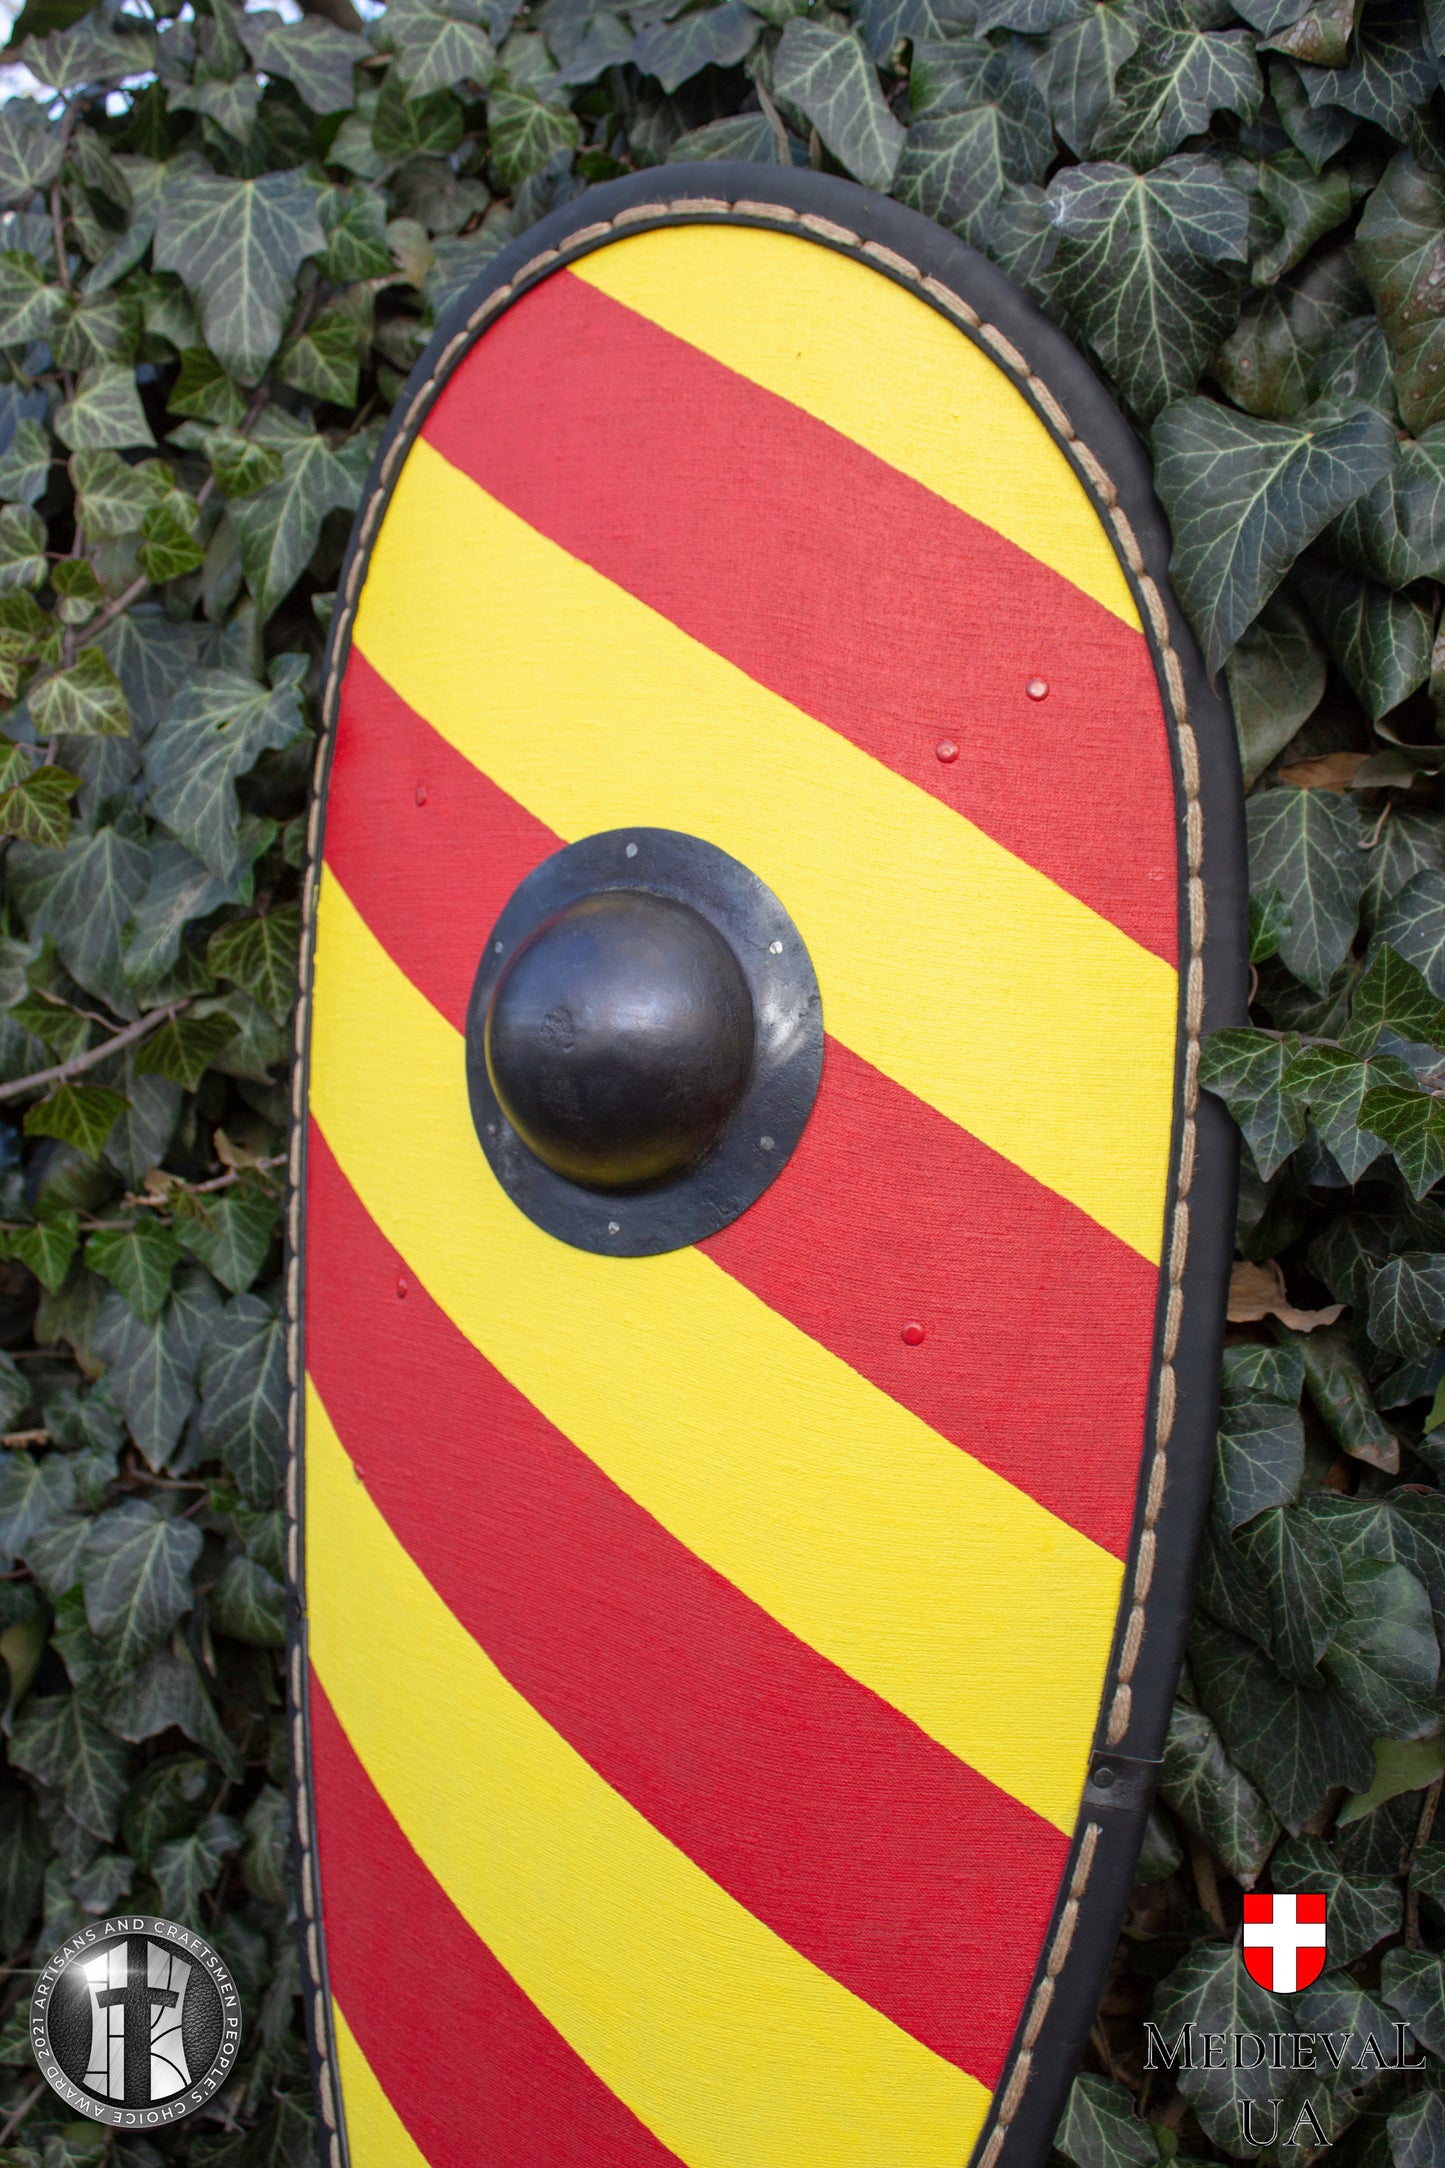 Medieval kite shield